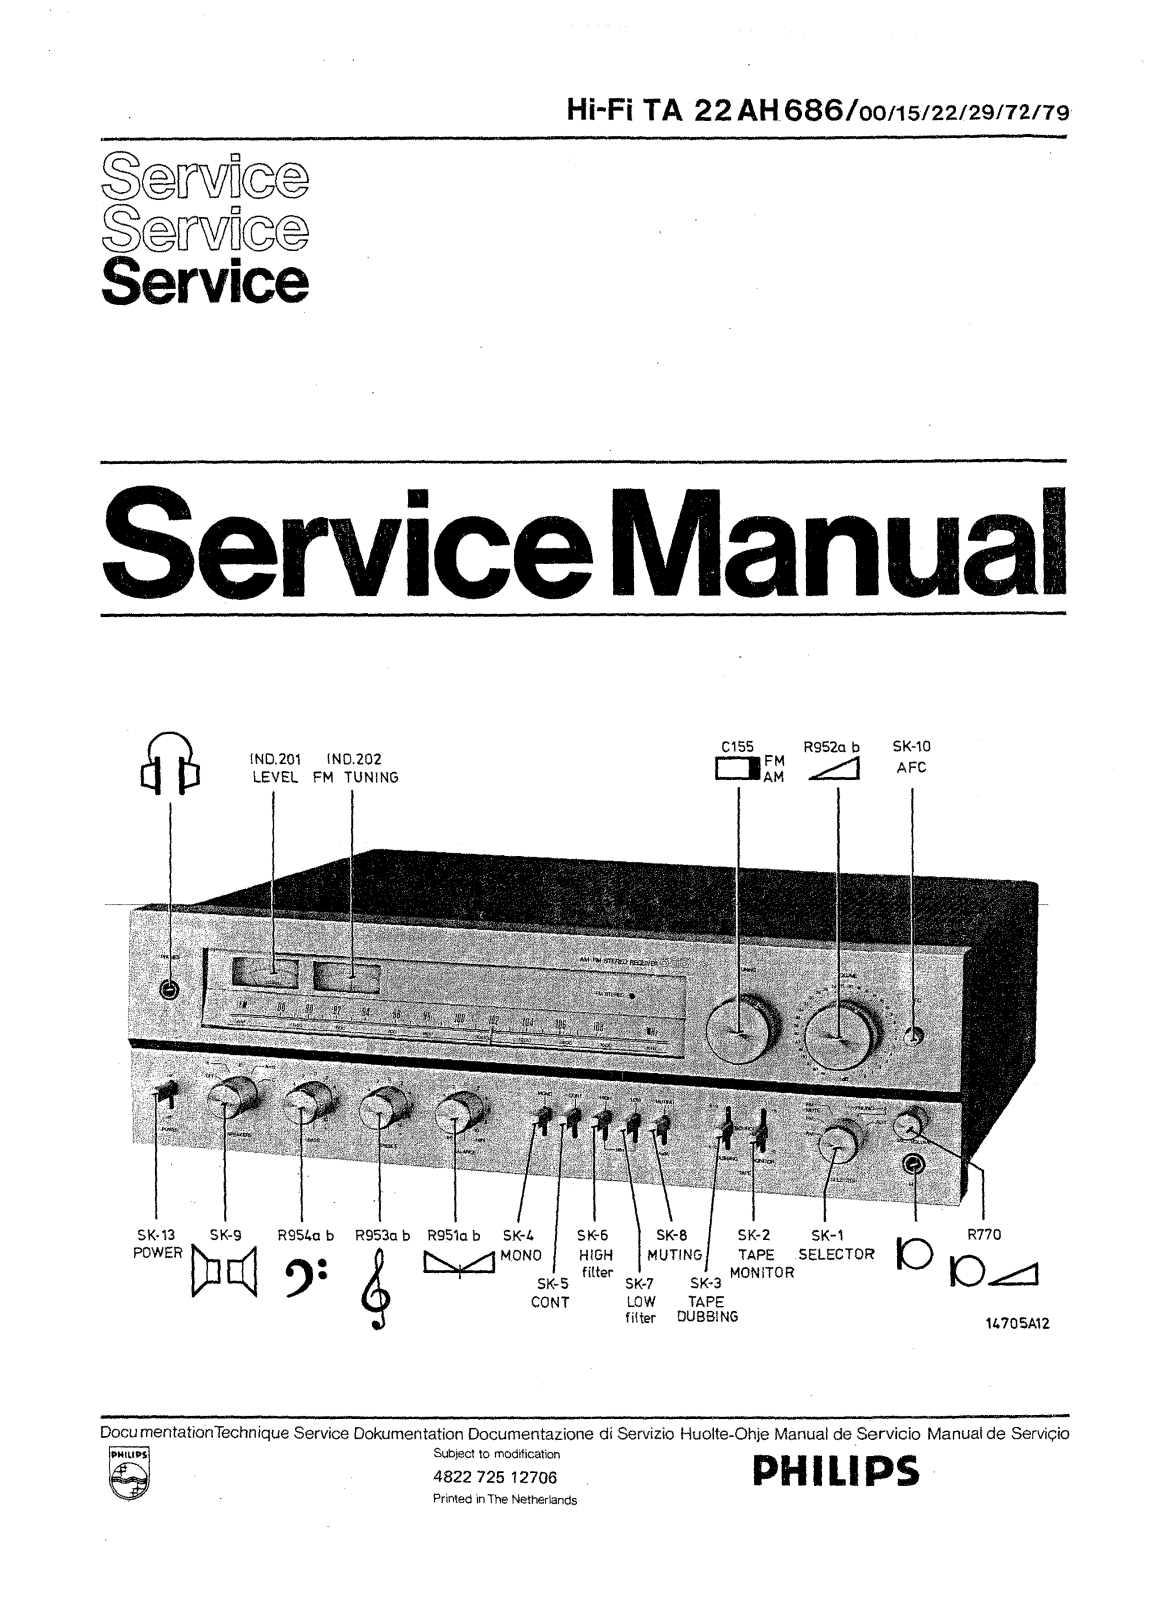 Philips 22-AH-686 Service Manual